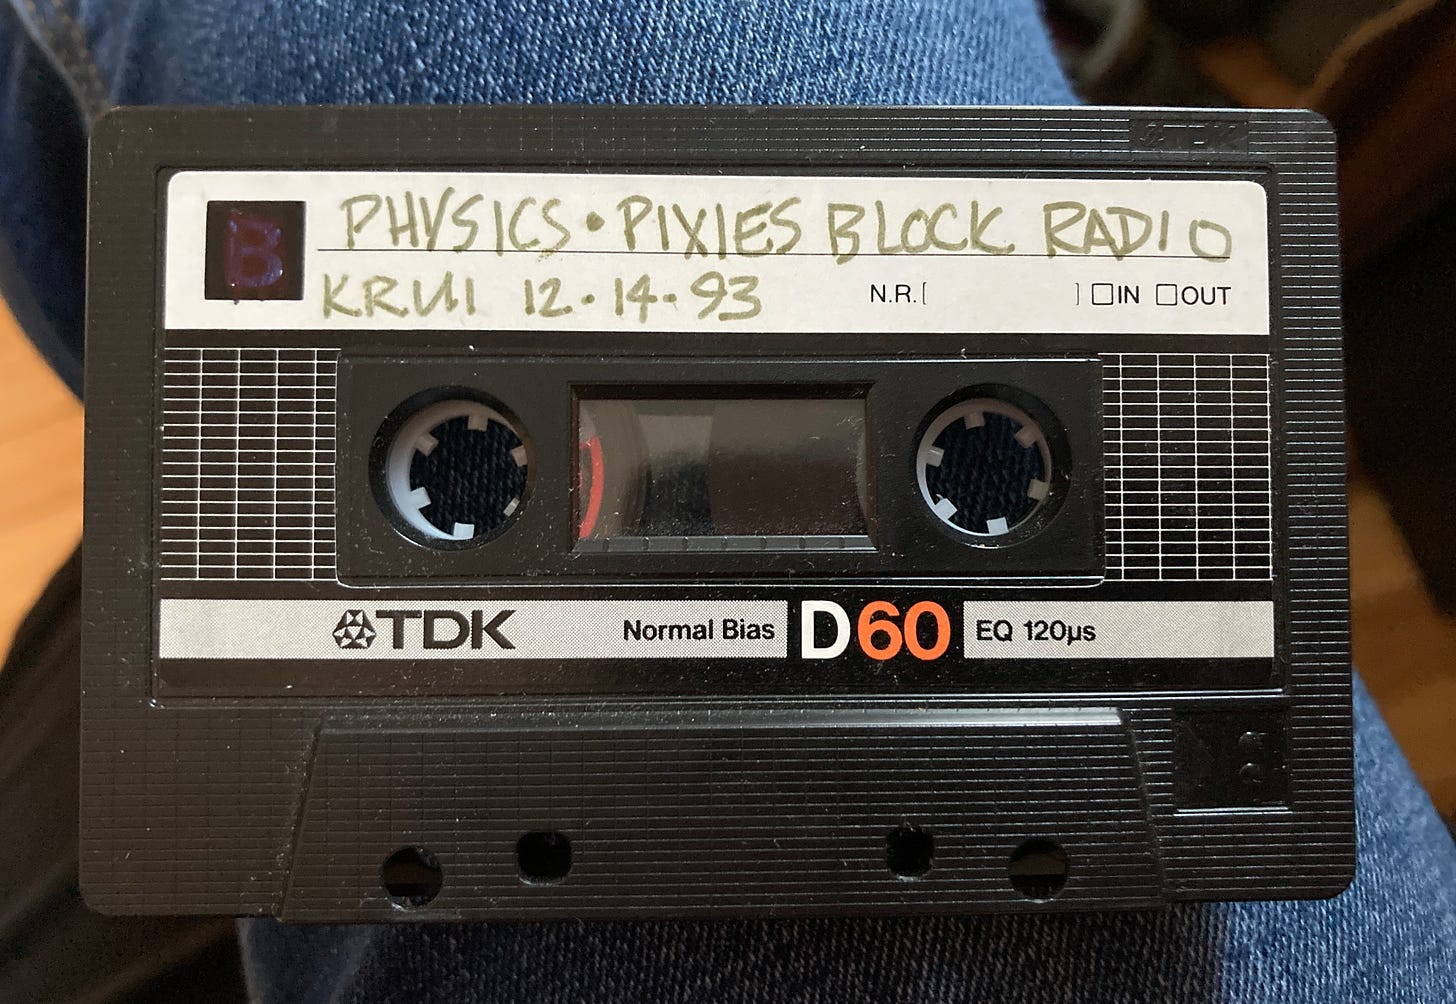 TDK Normal Bias D60 cassette tape labeled PHYSICS * PIXIES BLOCK RADIO / KRUI 12-14-93